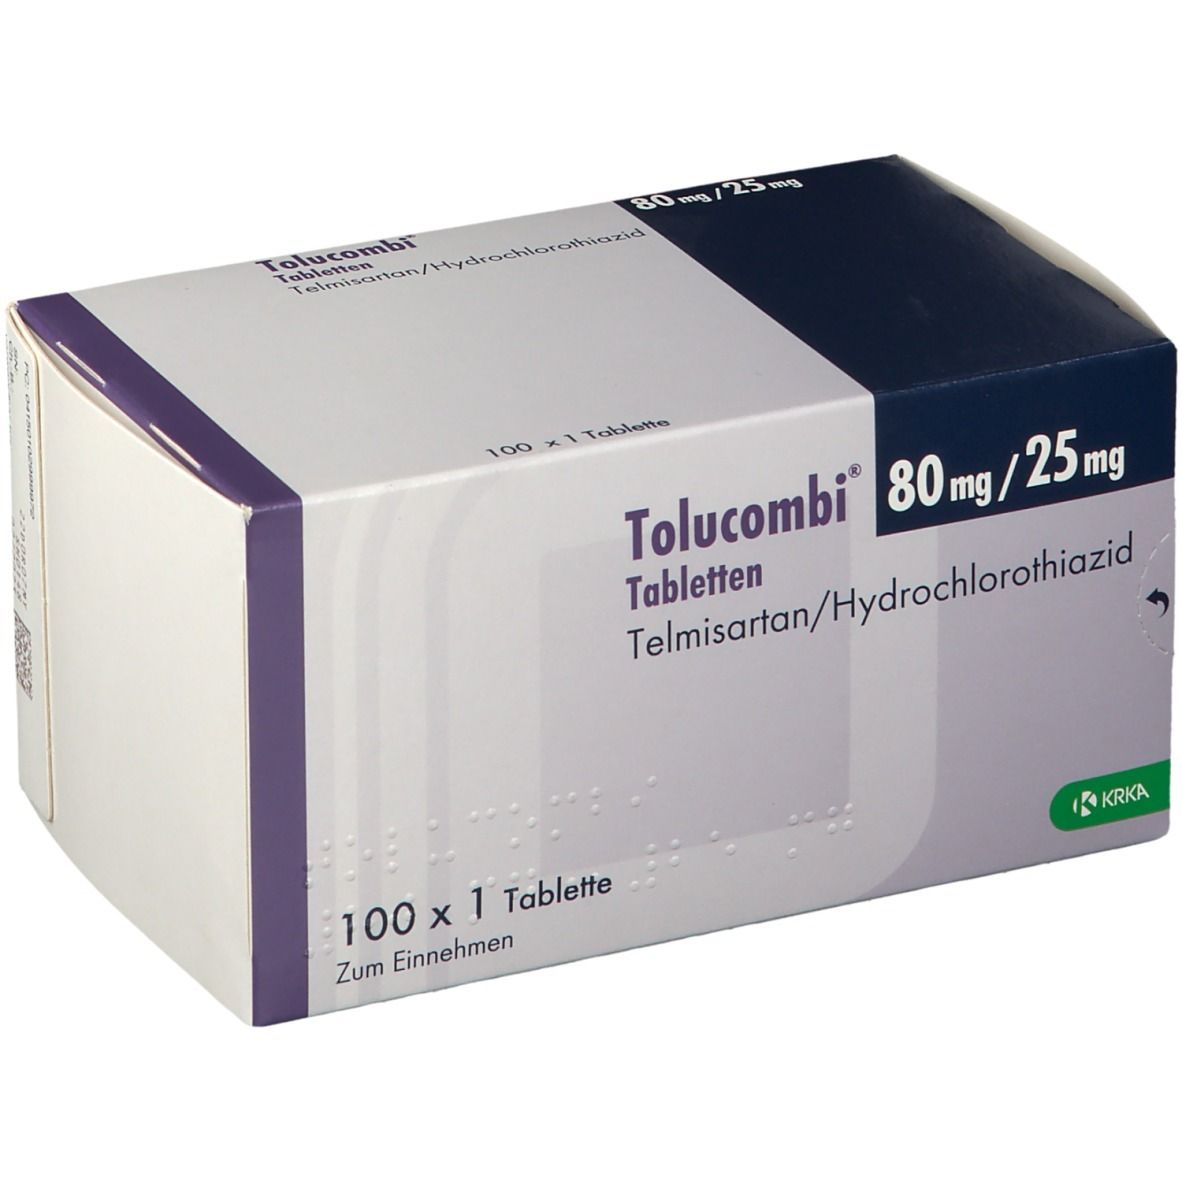 Tolucombi® 80 mg/25 mg